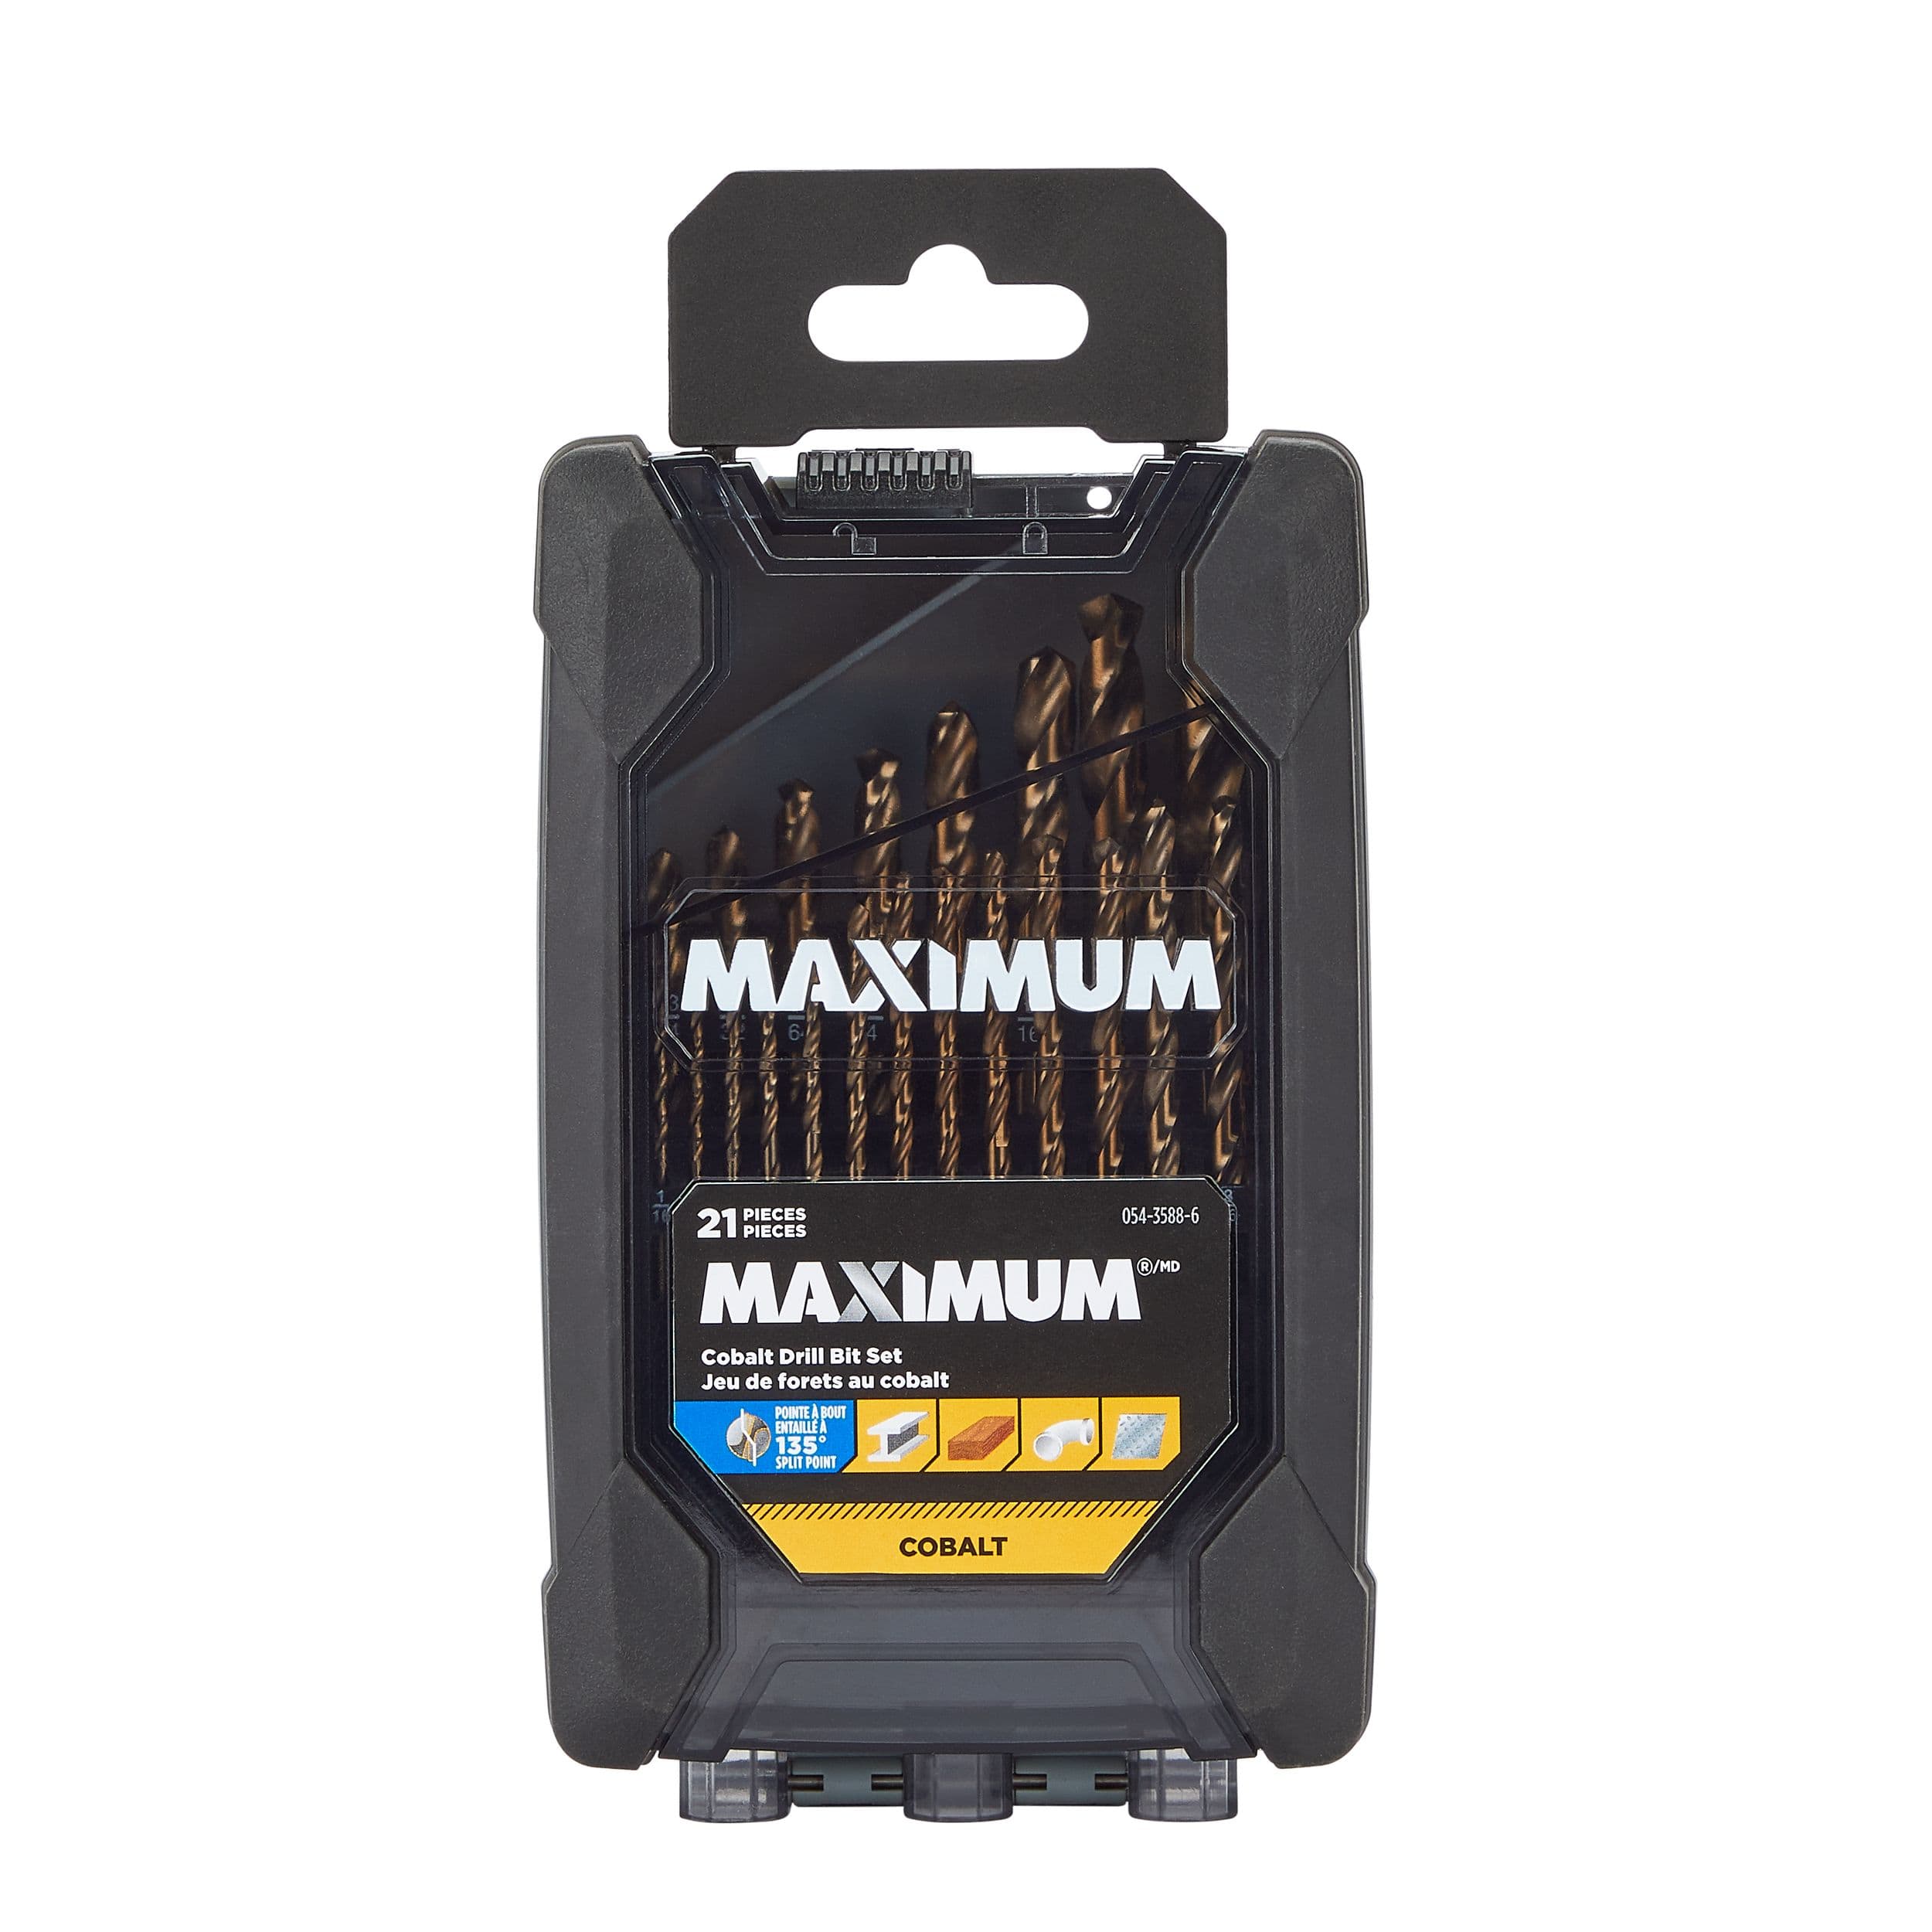 MAXIMUM Cobalt Drill Bit Set for Wood, Metal, Plastic, 21-pc